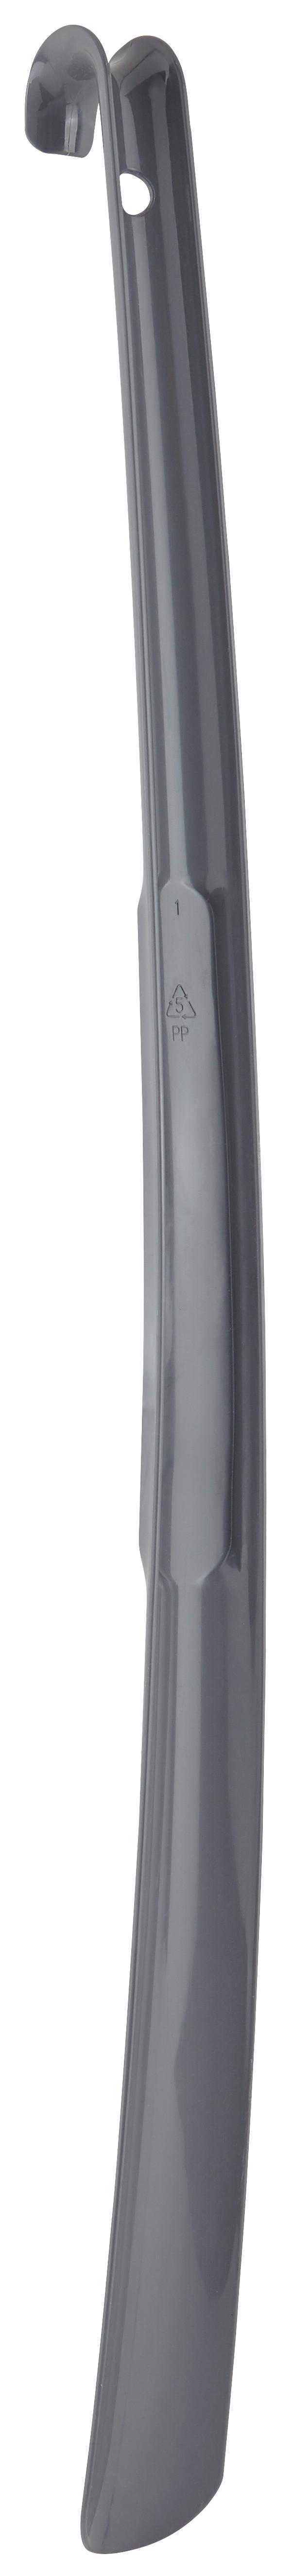 Žlica Za Čevlje Steve Xl -Ext- -Kma- - bela/antracit, umetna masa (4,3/64cm) - Modern Living